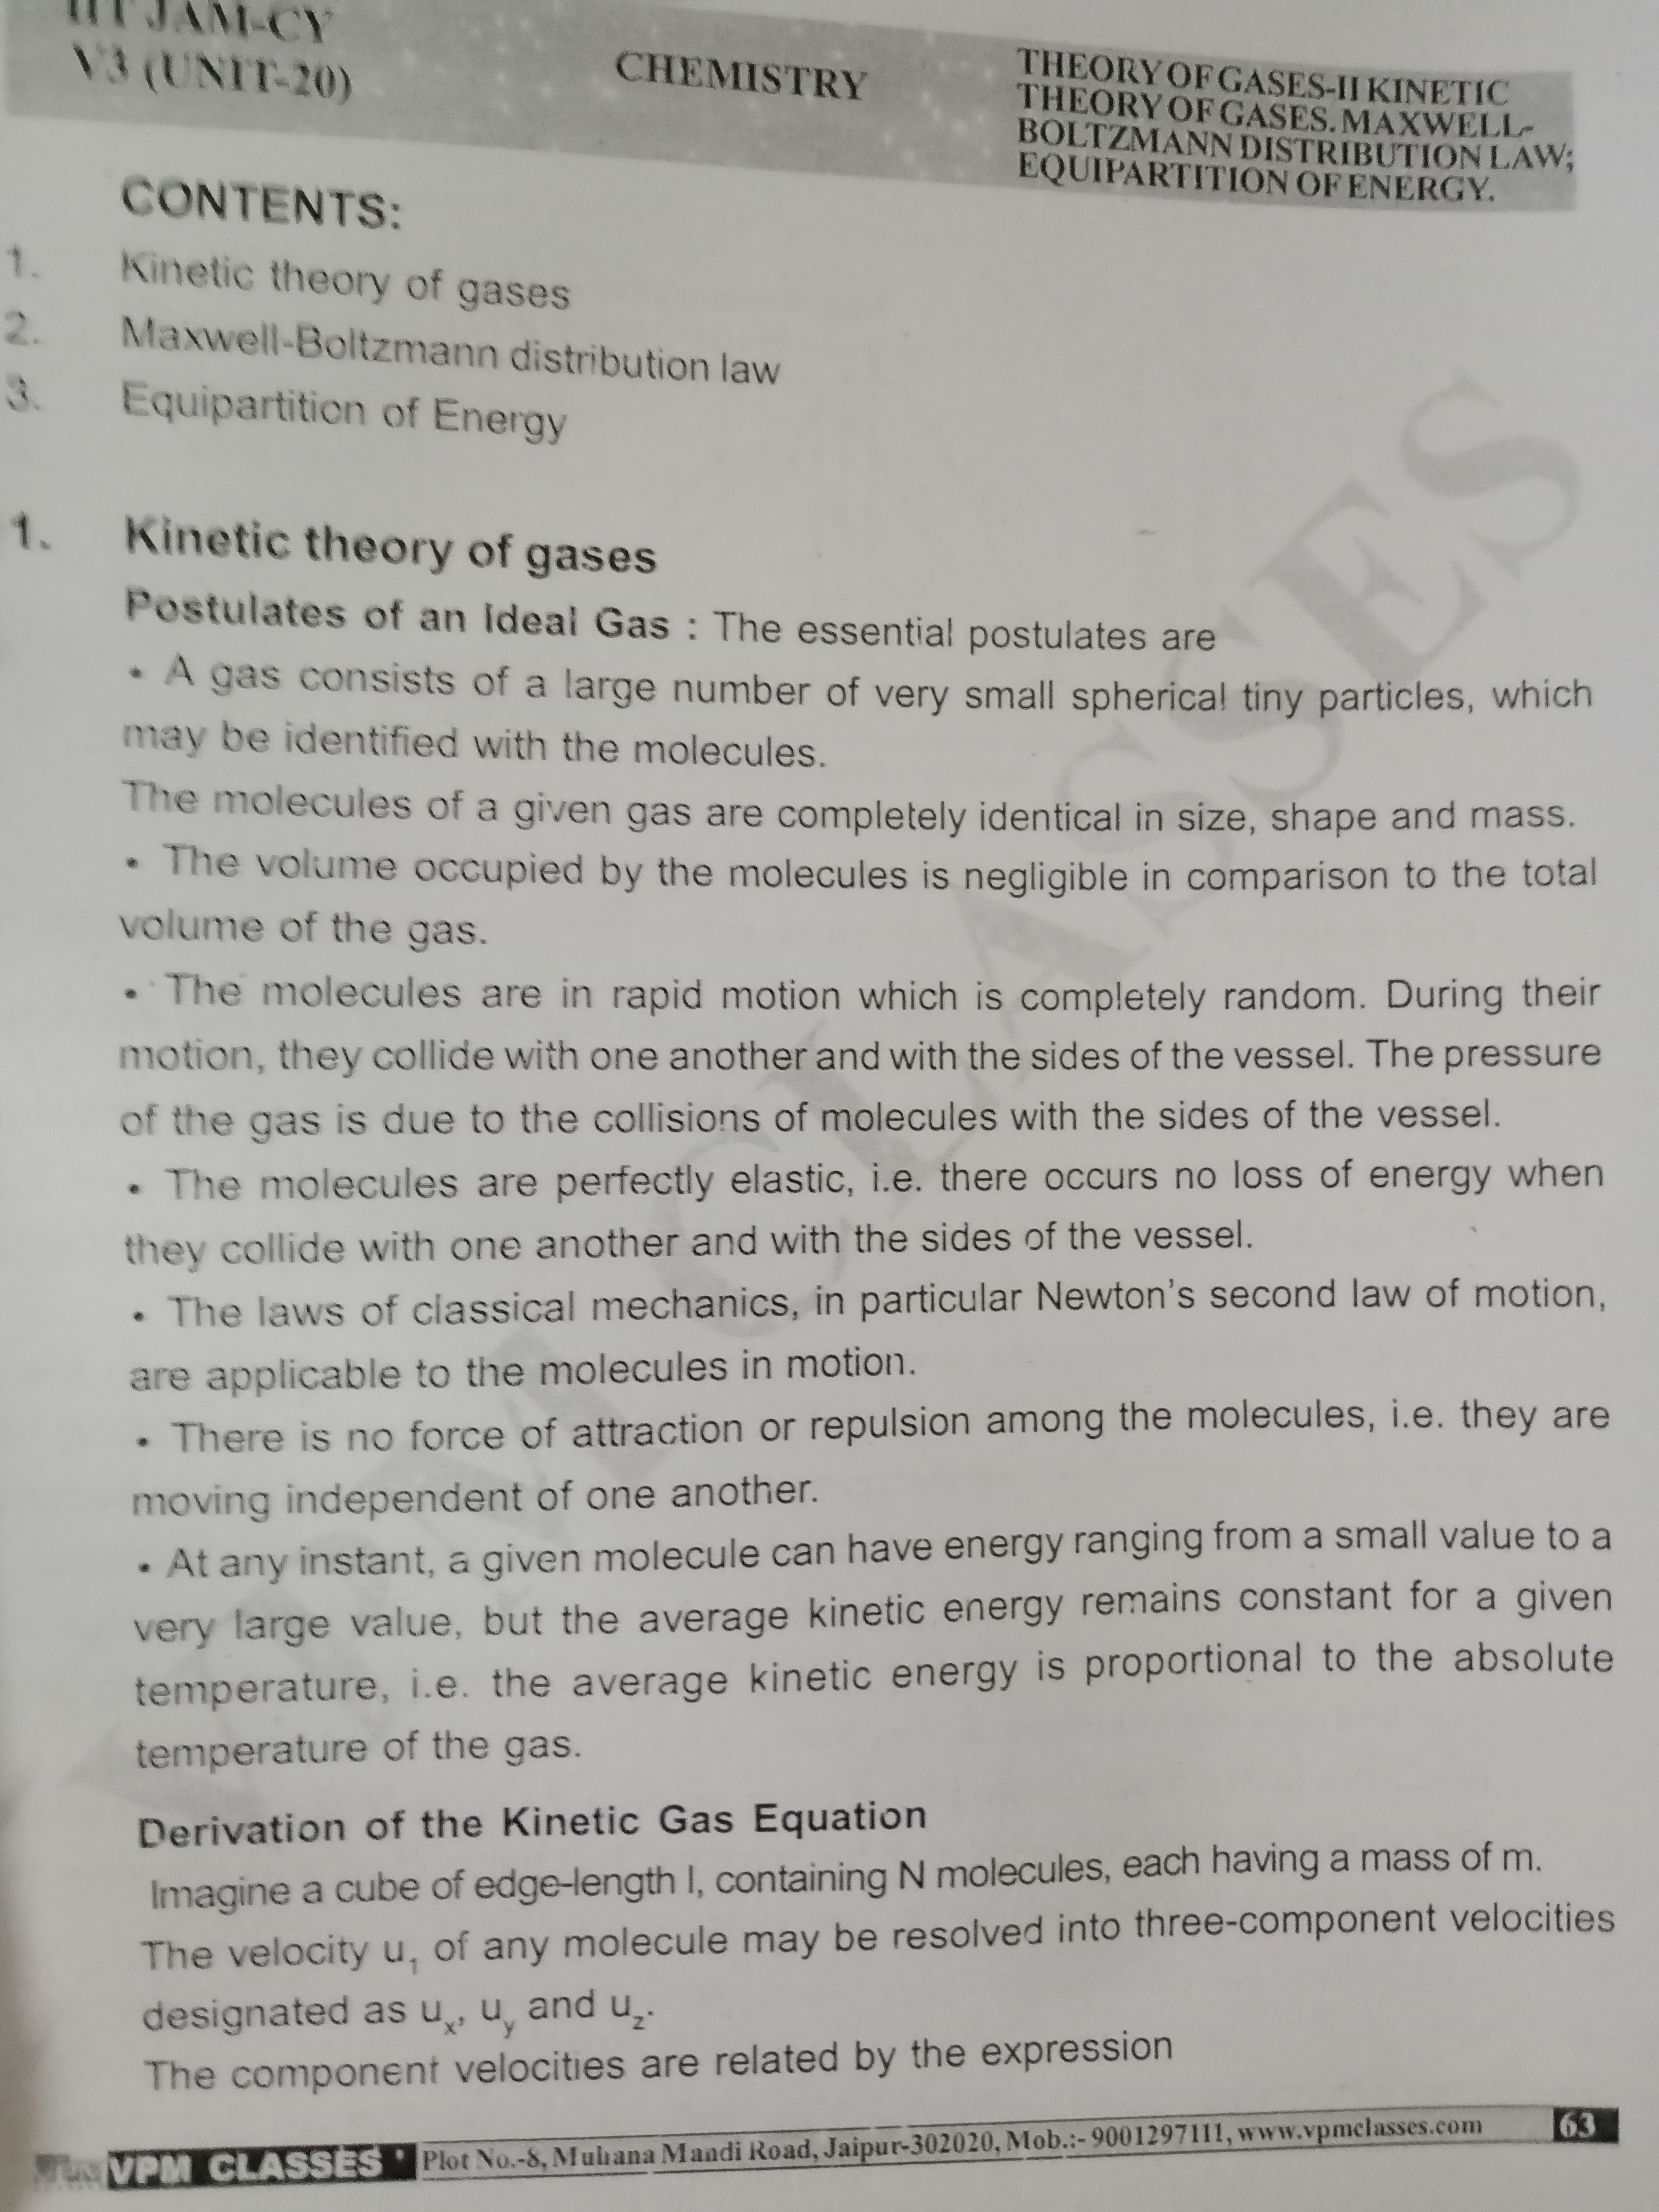 Kinetic theory of gases-IMG20191010210953.jpg